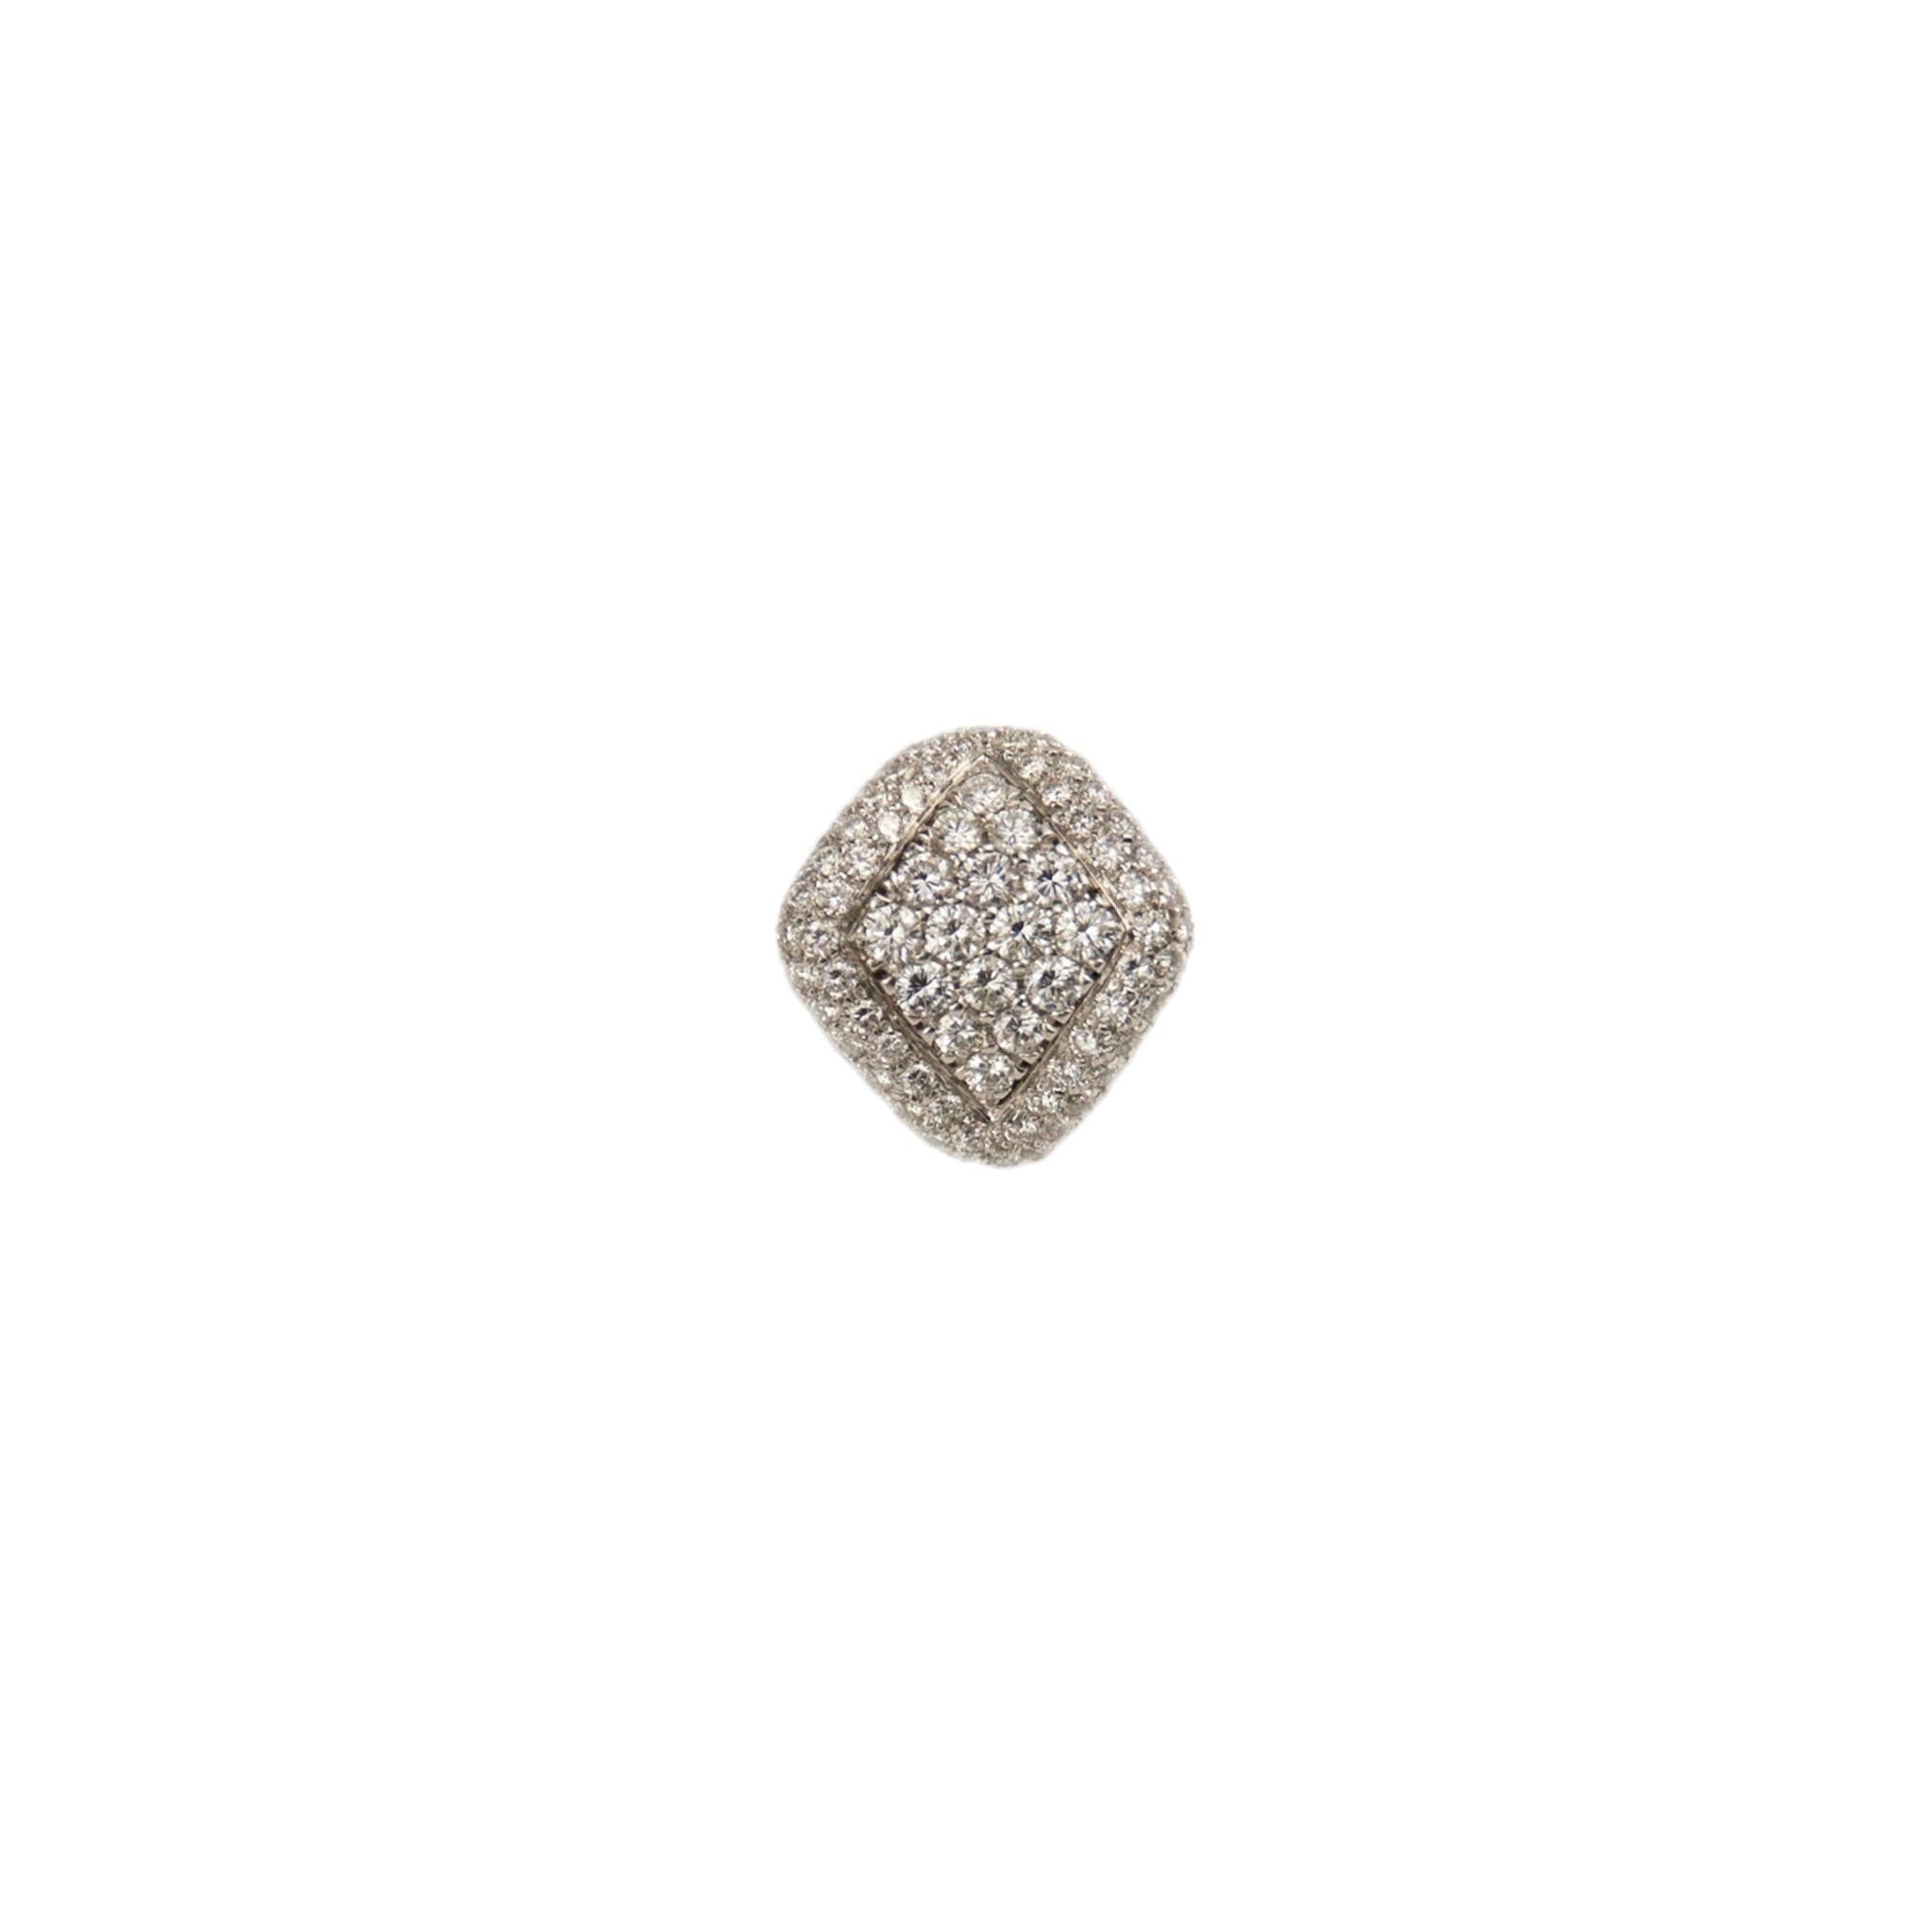 Damiani Pave Earrings
18K White Gold
Diamonds: 4.68ctw